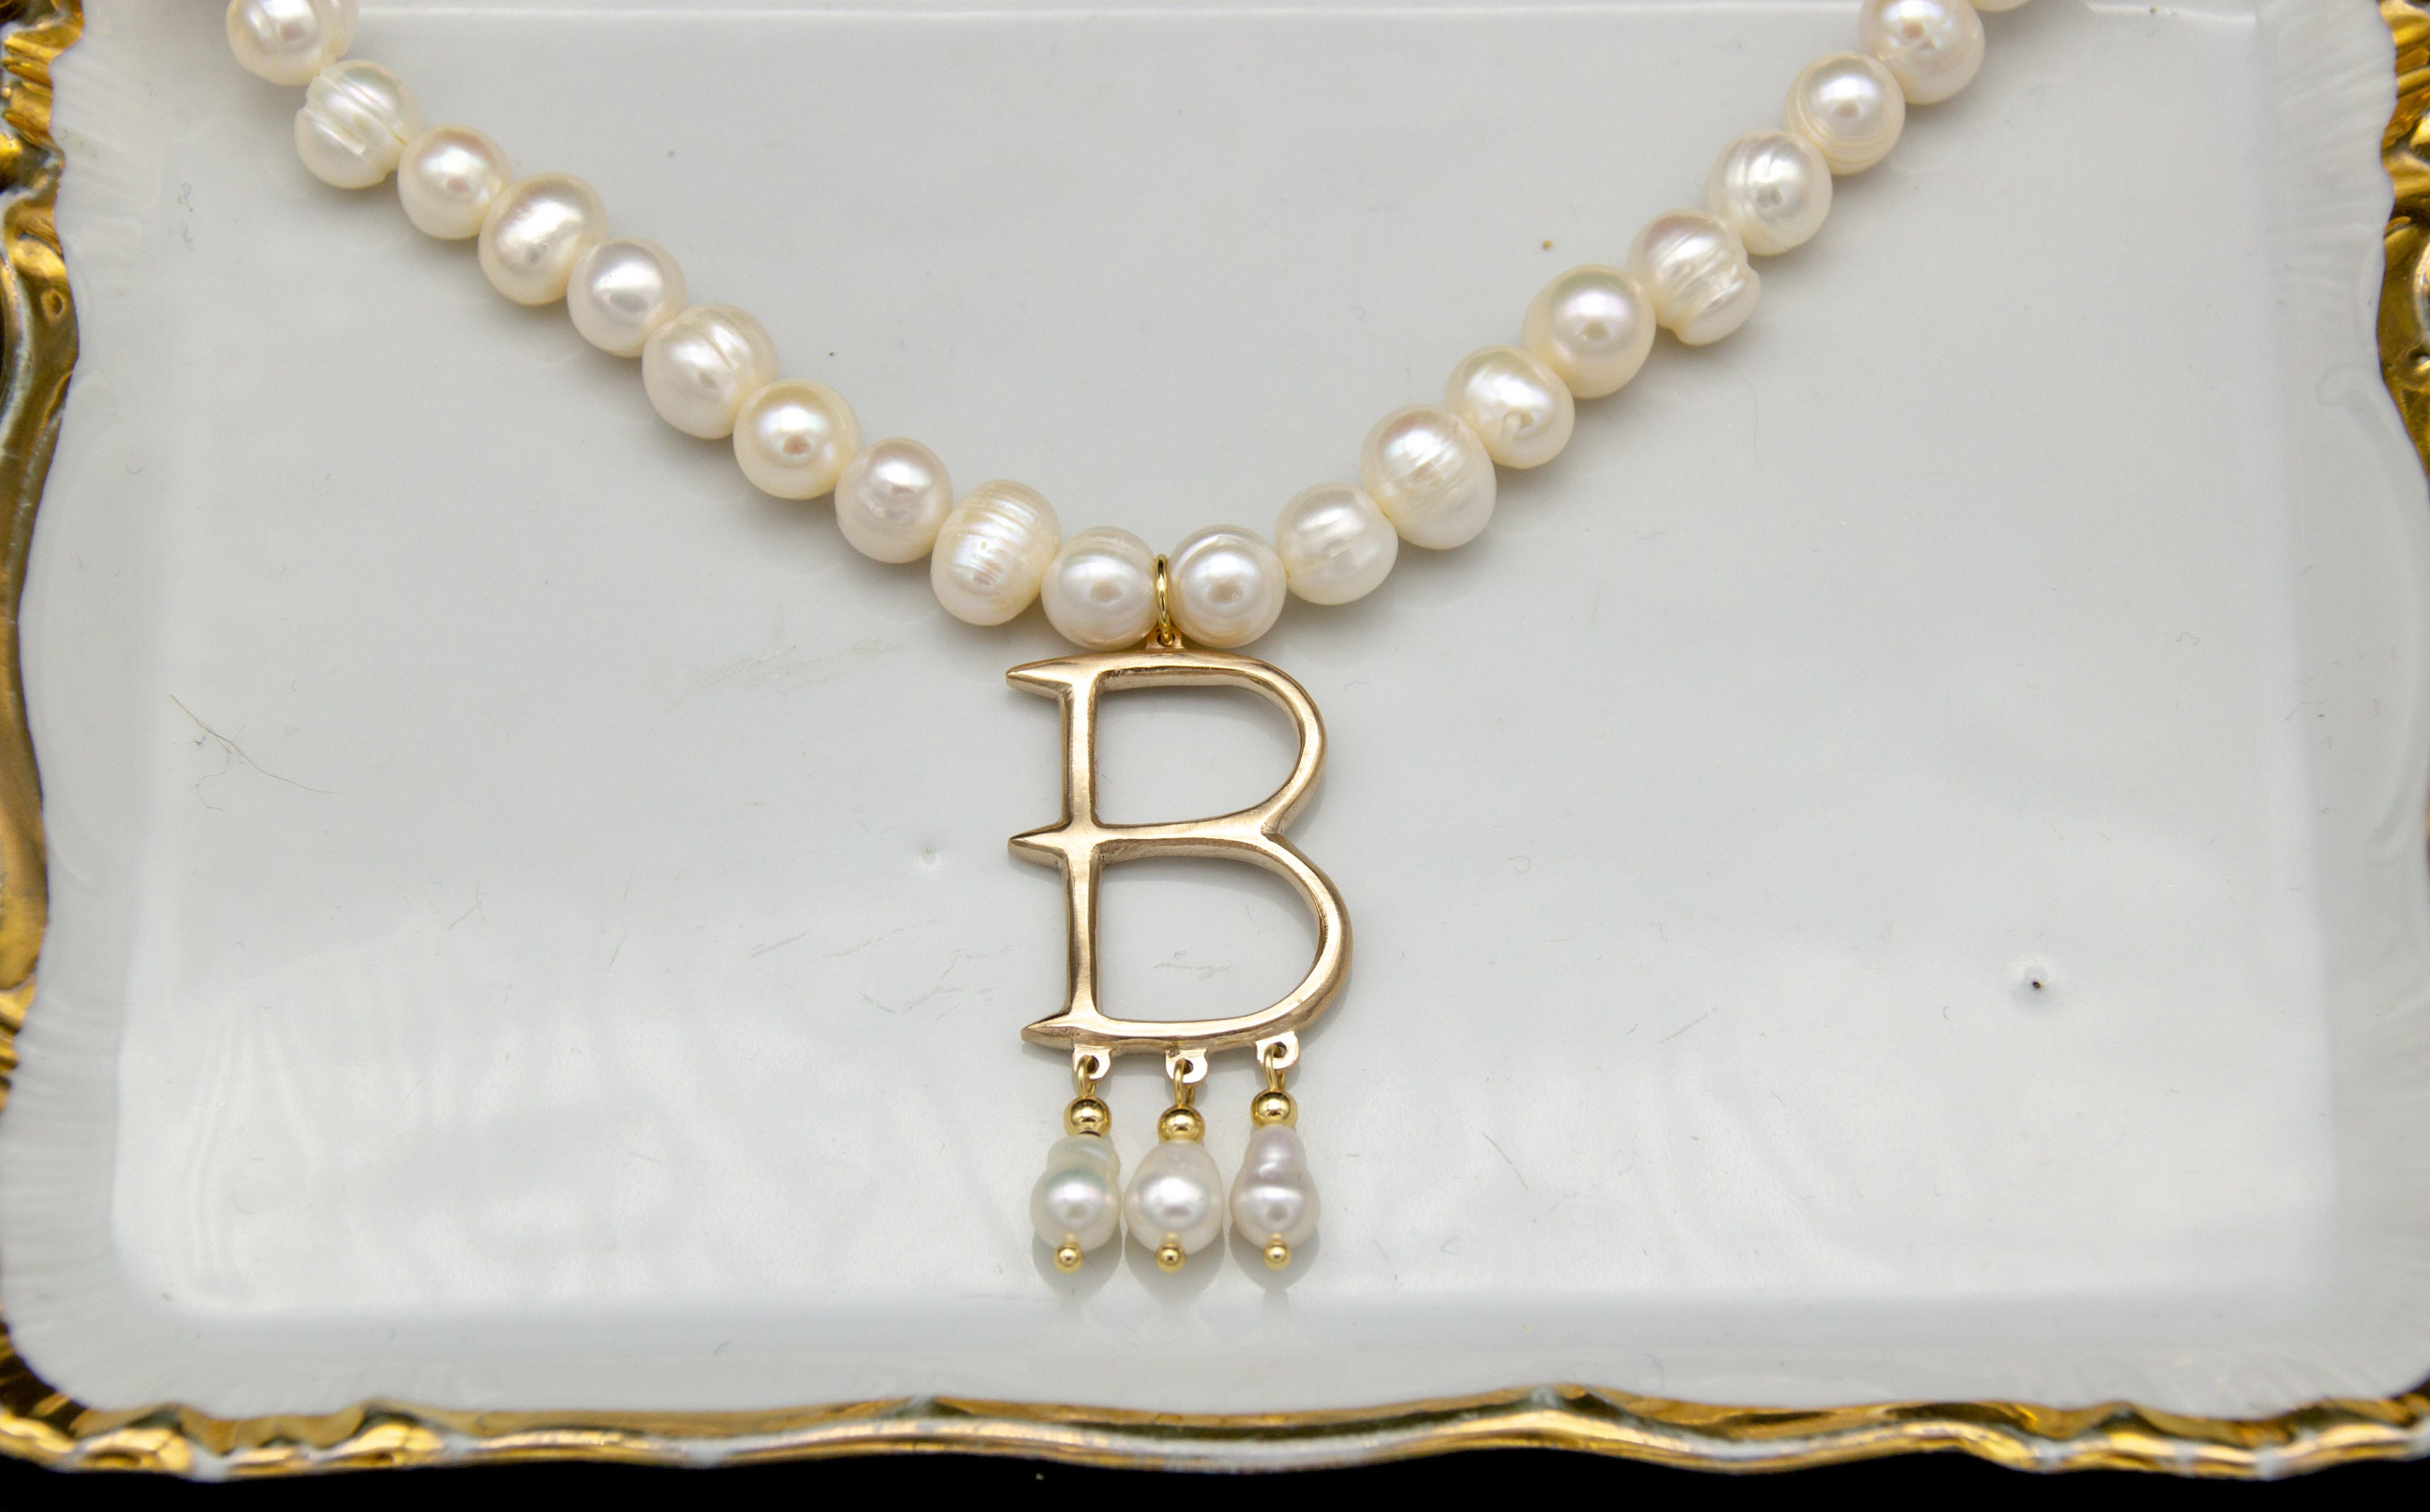 Anne Boleyn Necklace With B and Freshwater Pearls - Etsy Denmark